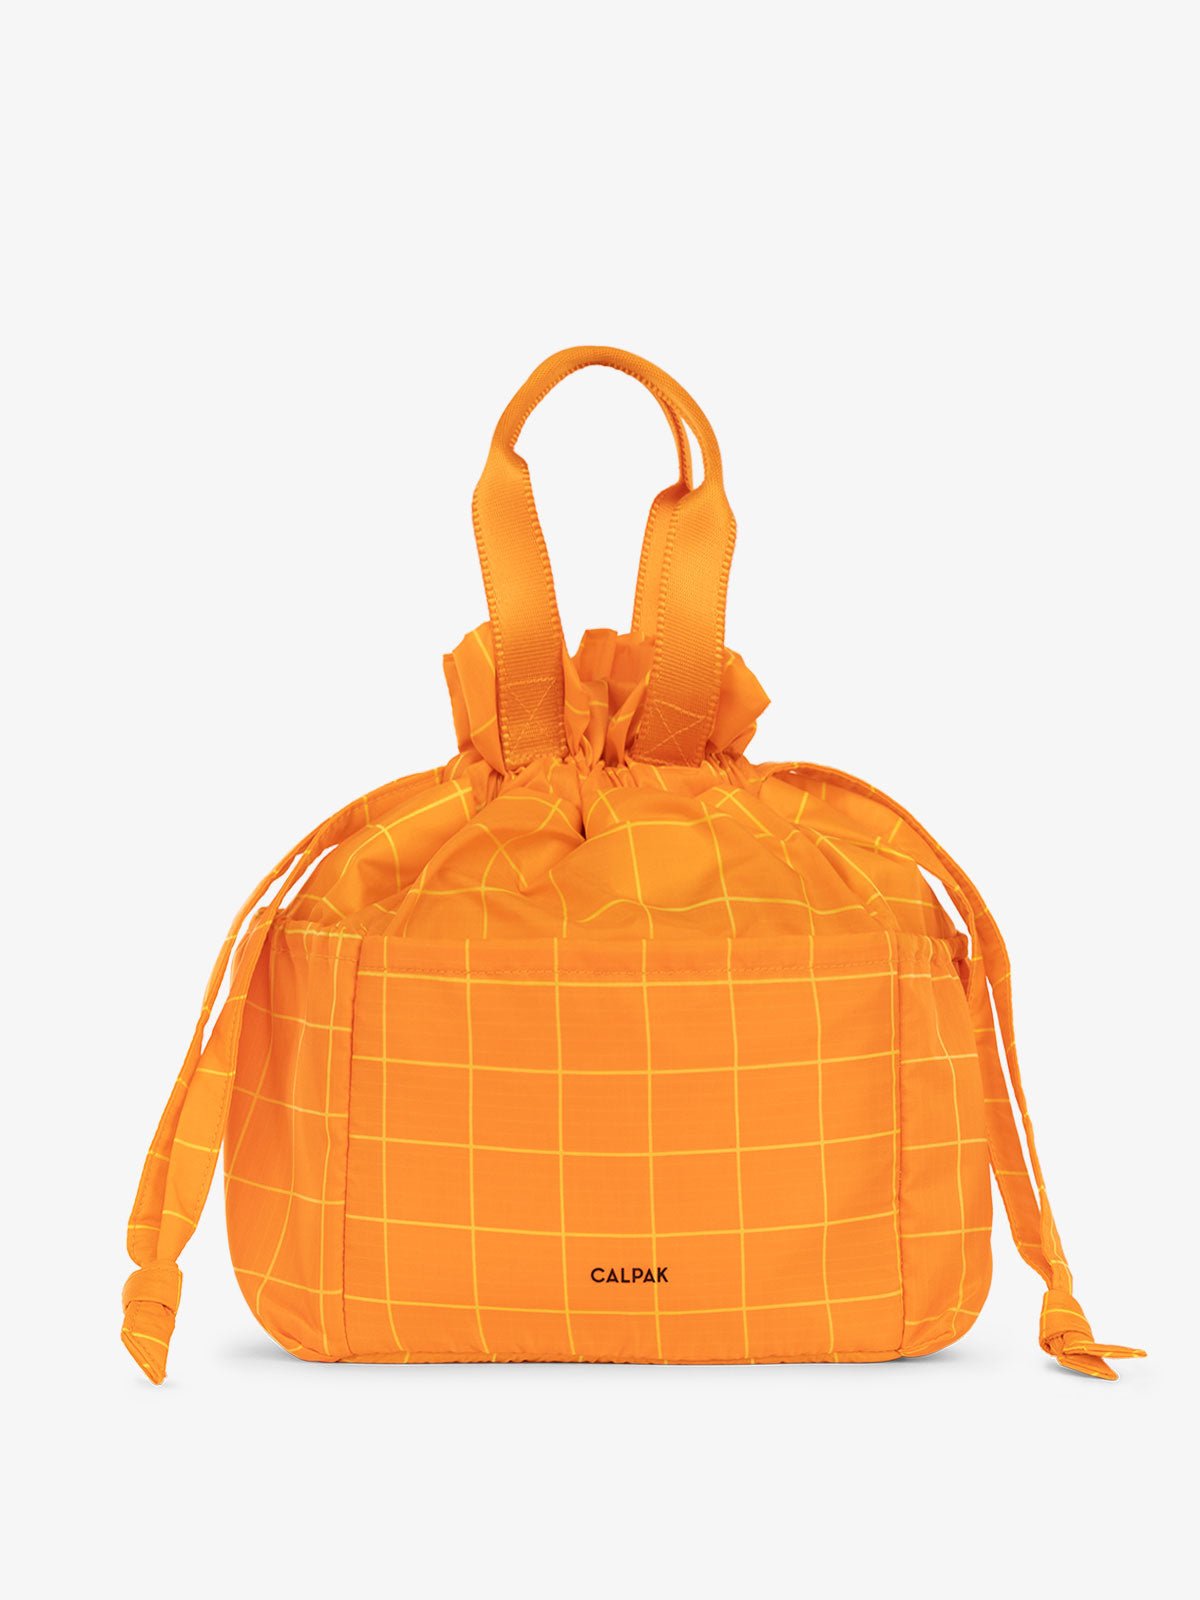 CALPAK Insulated Lunch Bag in orange grid